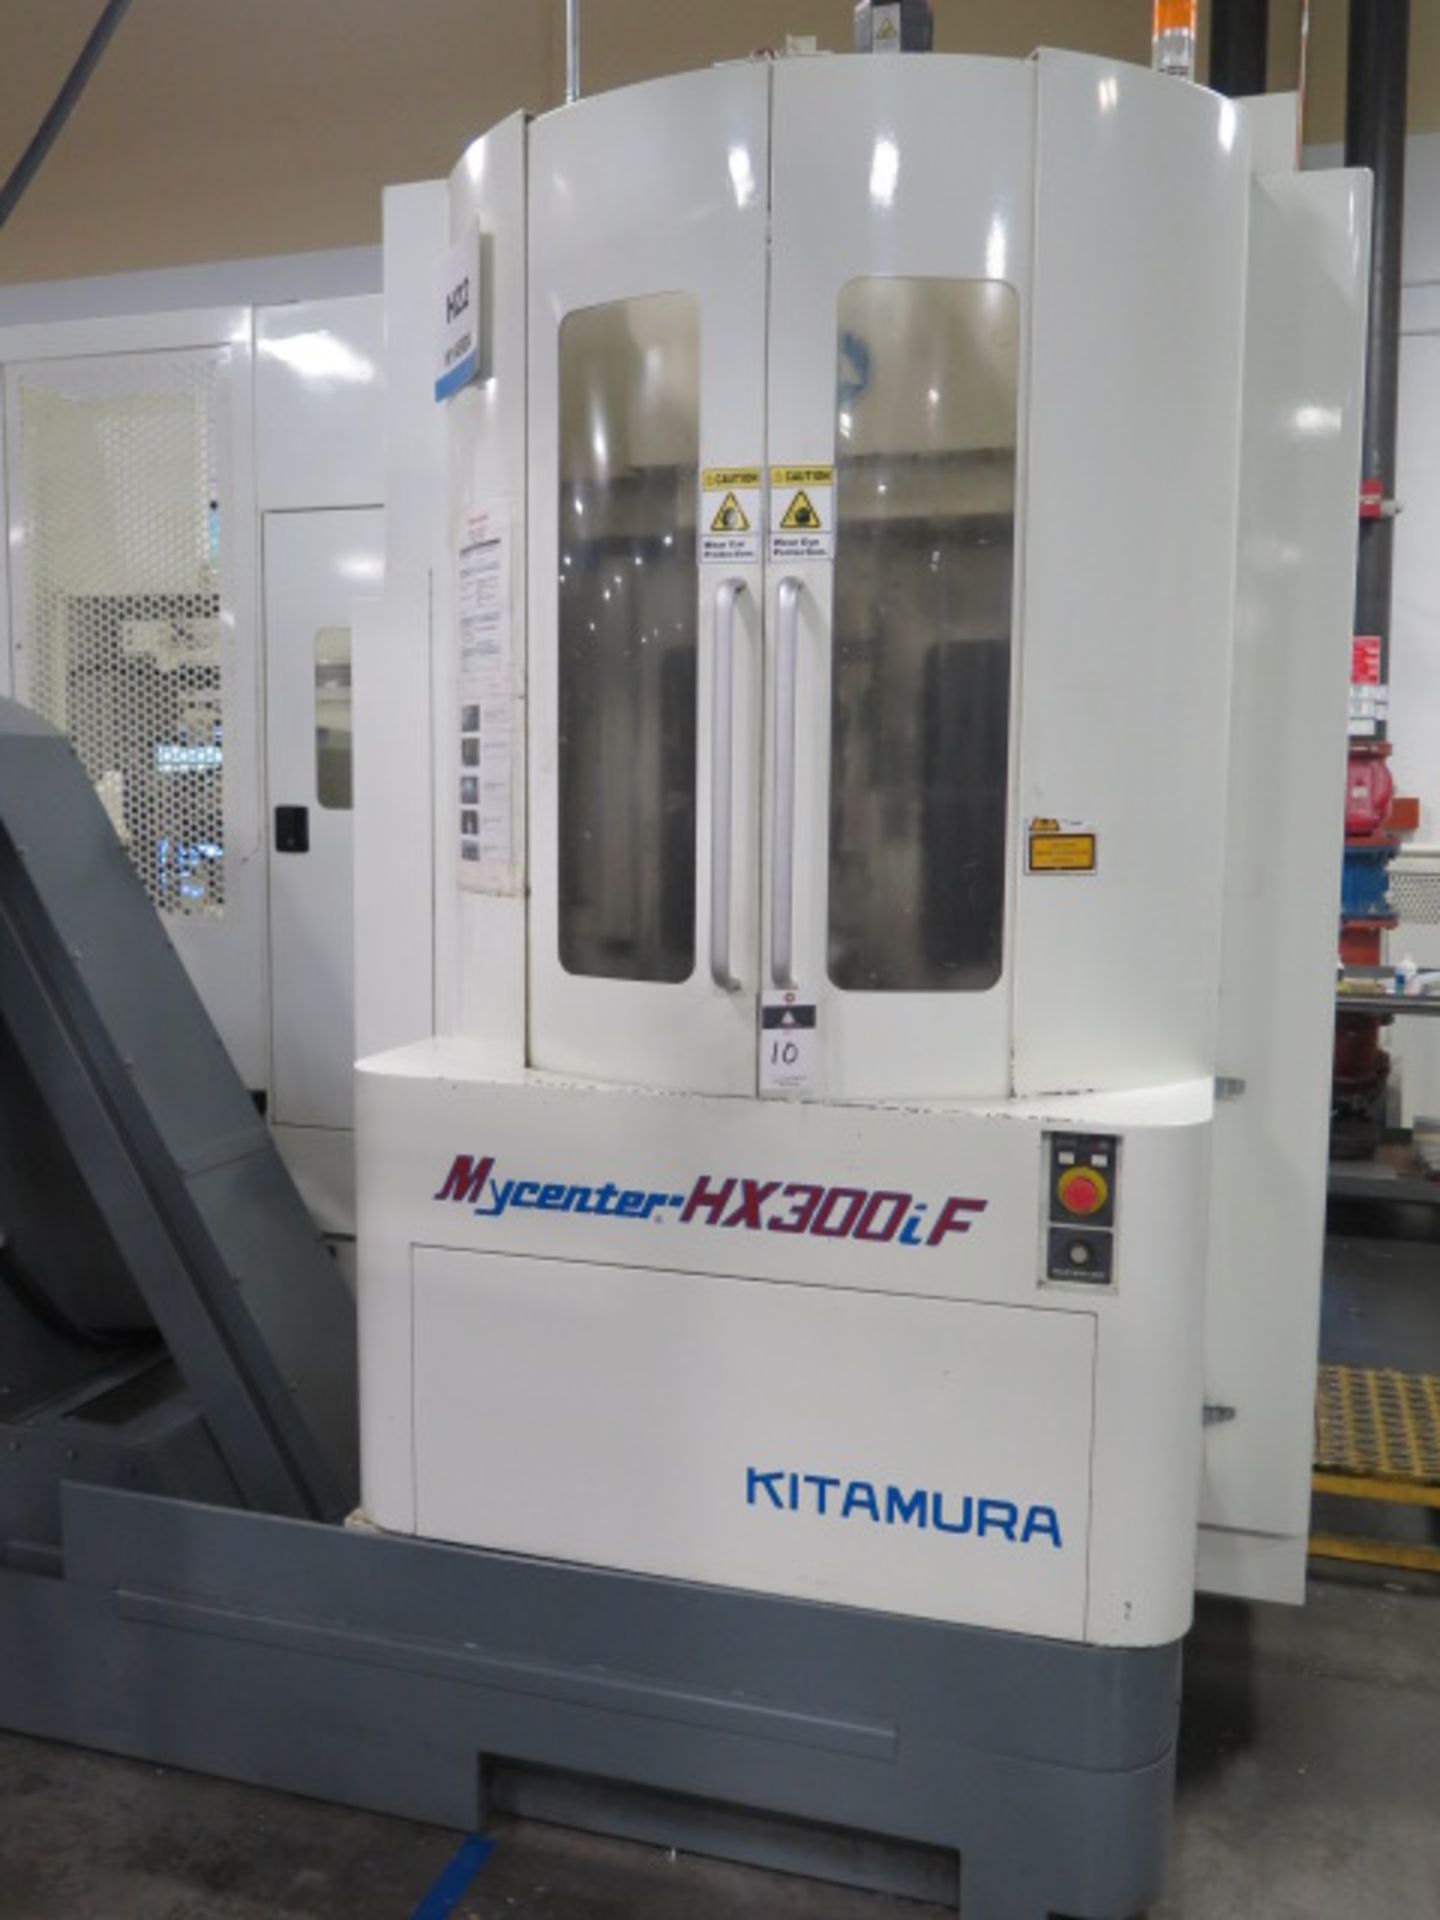 Kitamura Mycenter-HX300iF 2-Pallet 4-Axis CNC Horizontal Machining Center s/n 40975 w/ Fanuc Series - Image 3 of 22